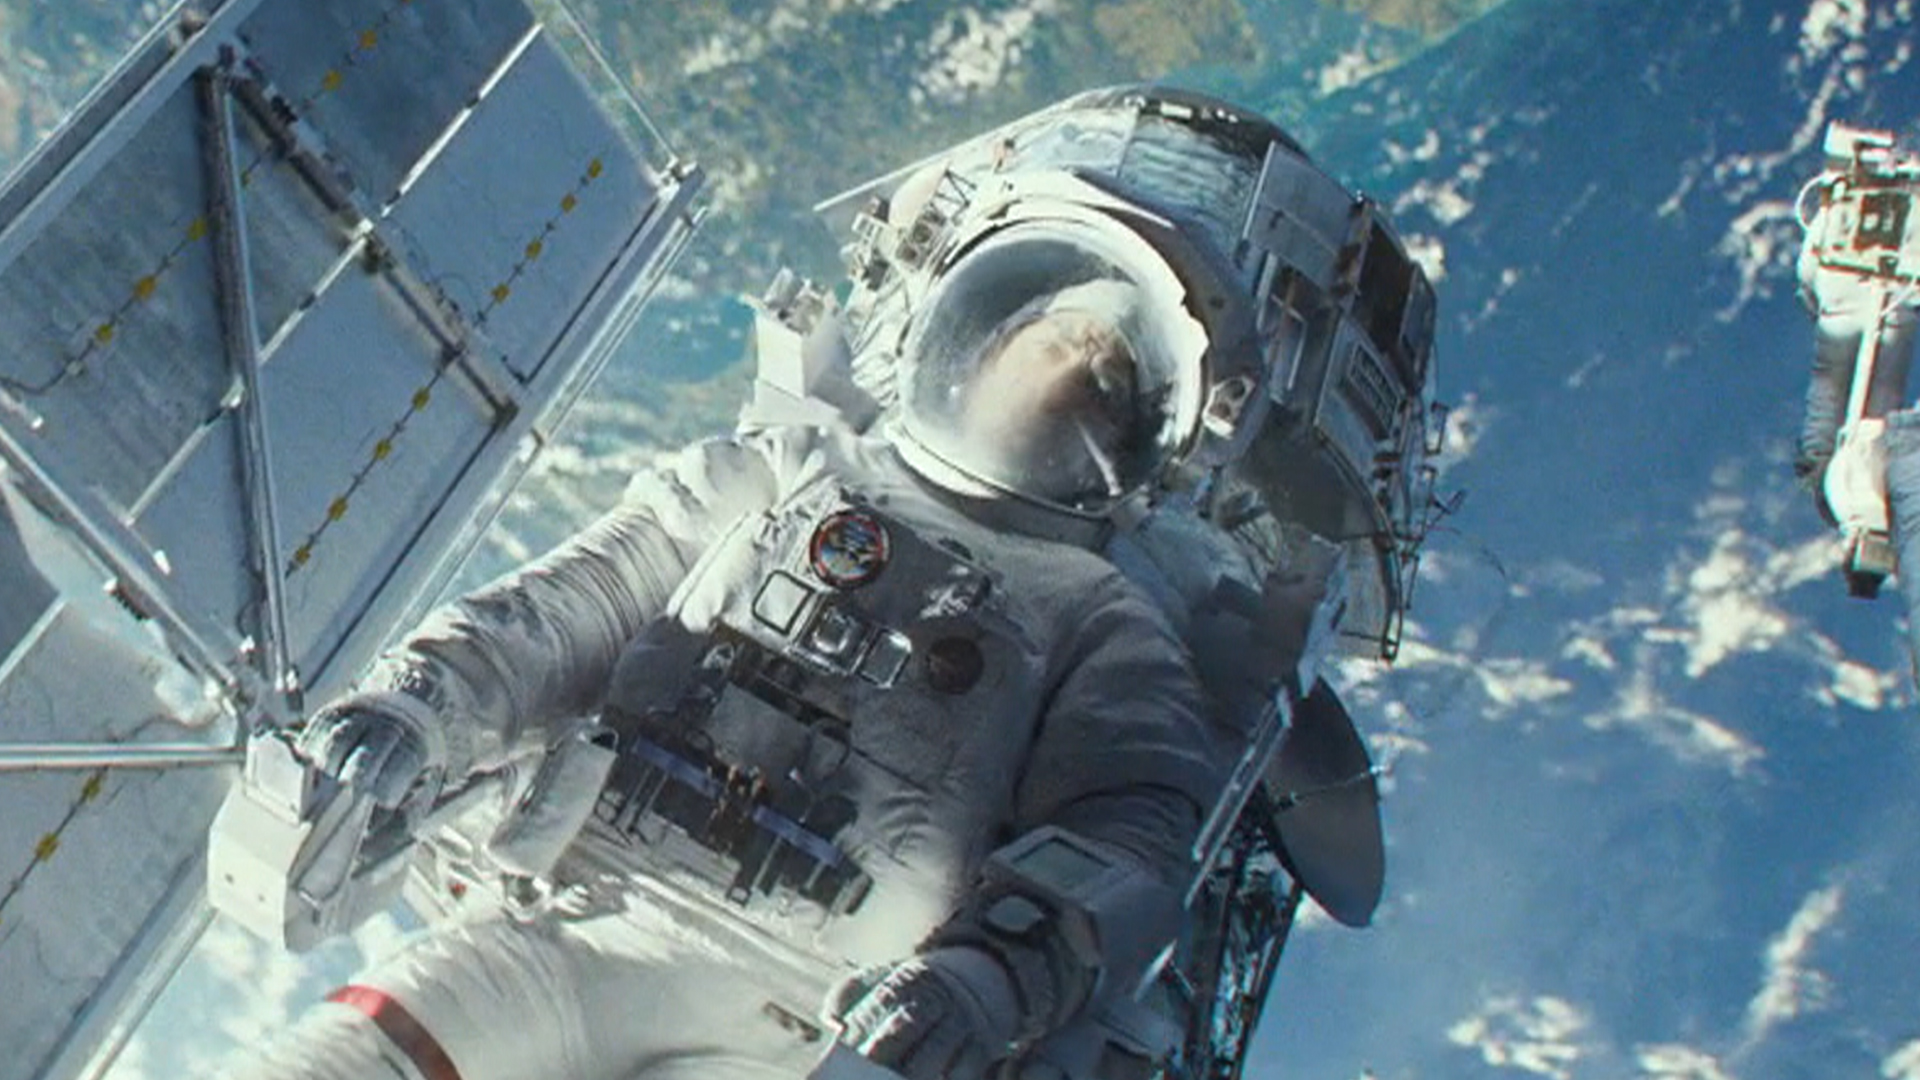 Life on space station imitates art of 'Gravity' movie